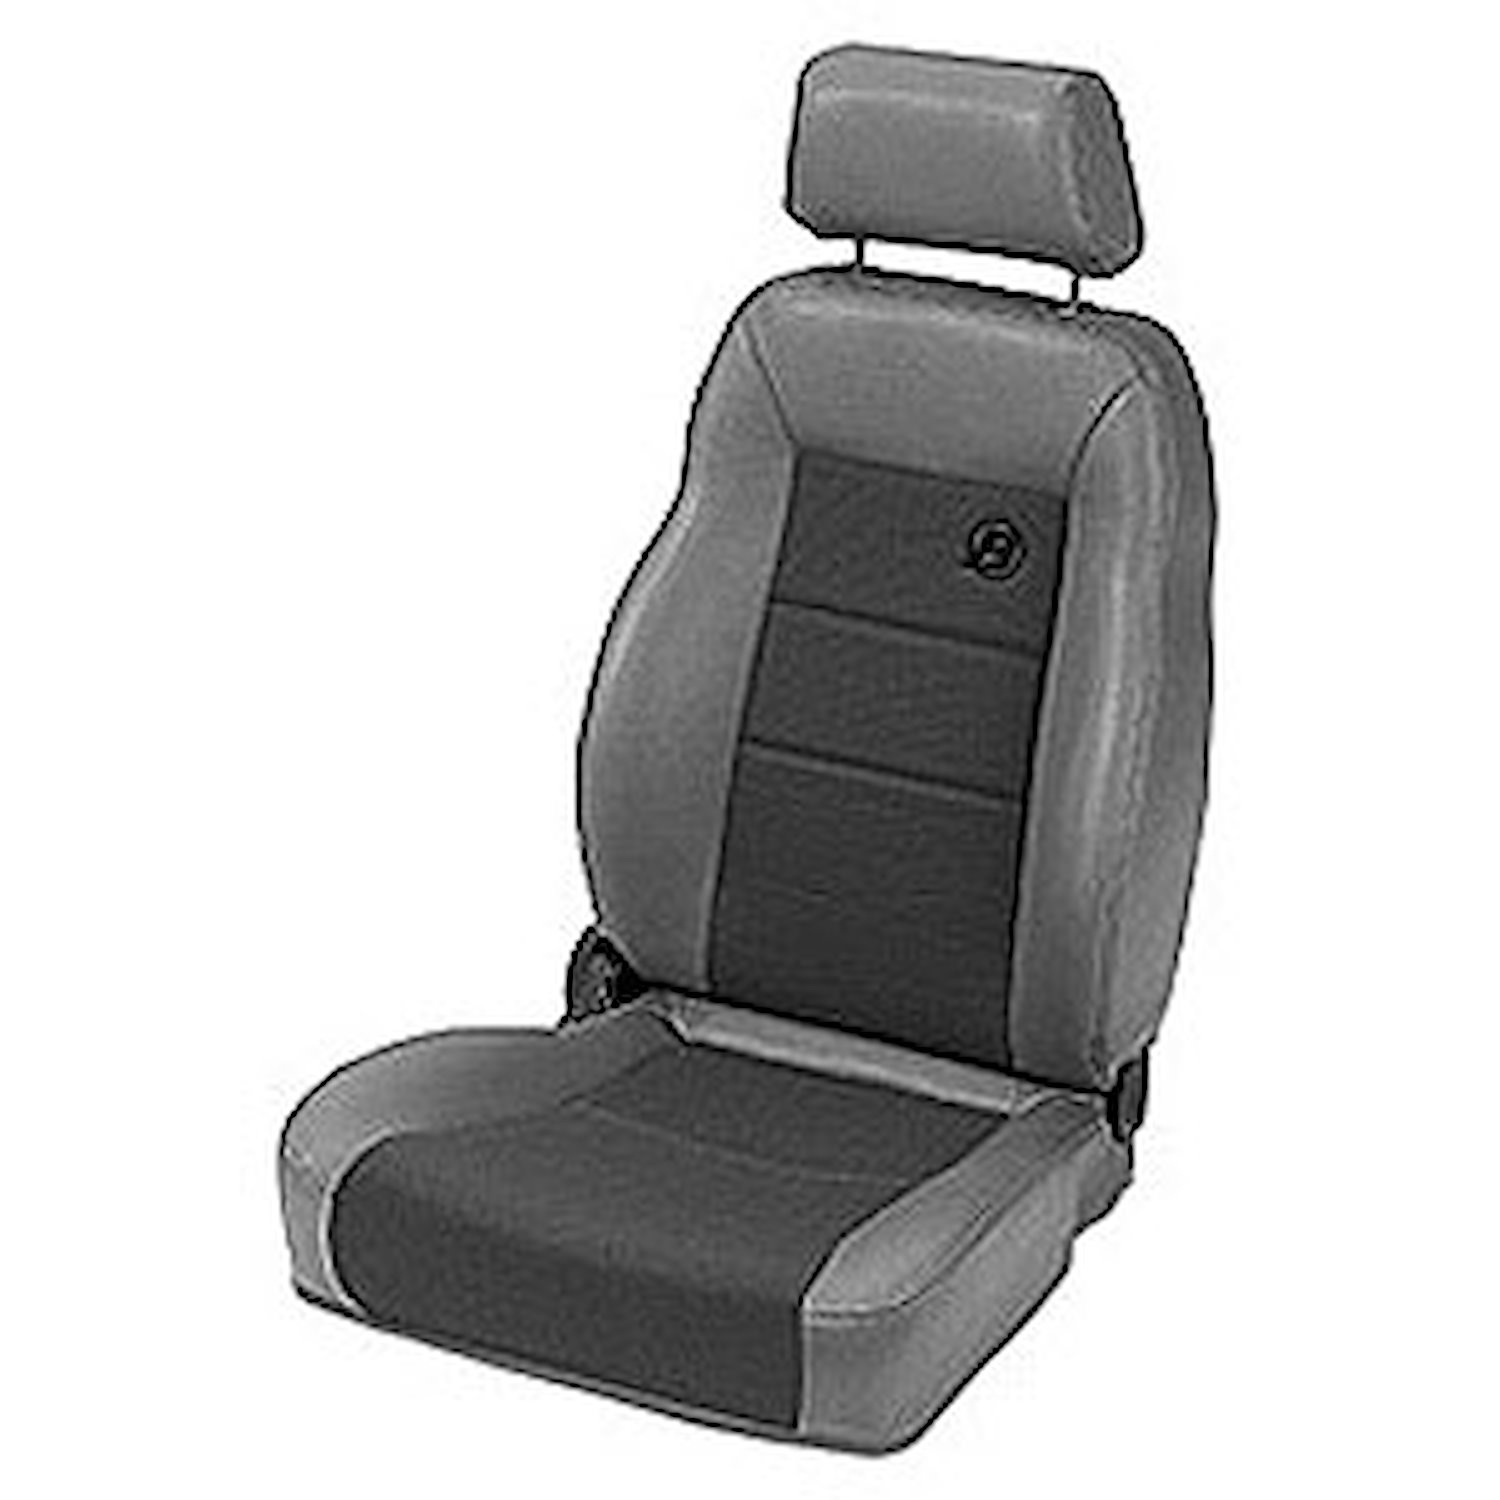 Trailmax II Pro Seat, Charcoal, Front, High-Back, Vinyl, w/Center Fabric Insert, Premium Bucket, Passenger Side,